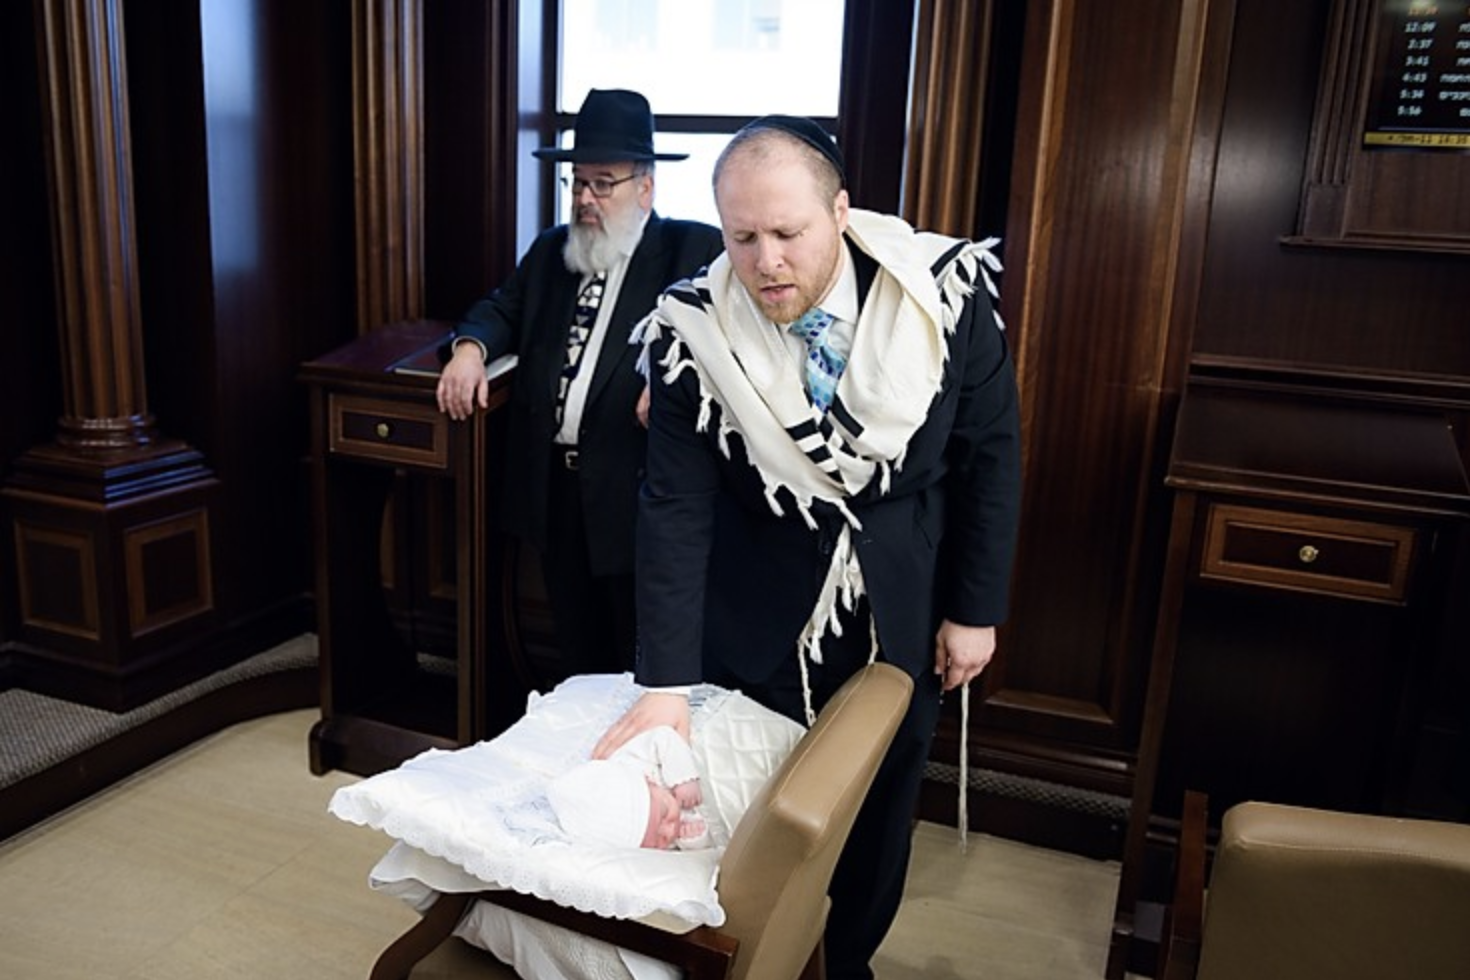 Rabbi Shmuel Katz performing prayer prior to circumcision